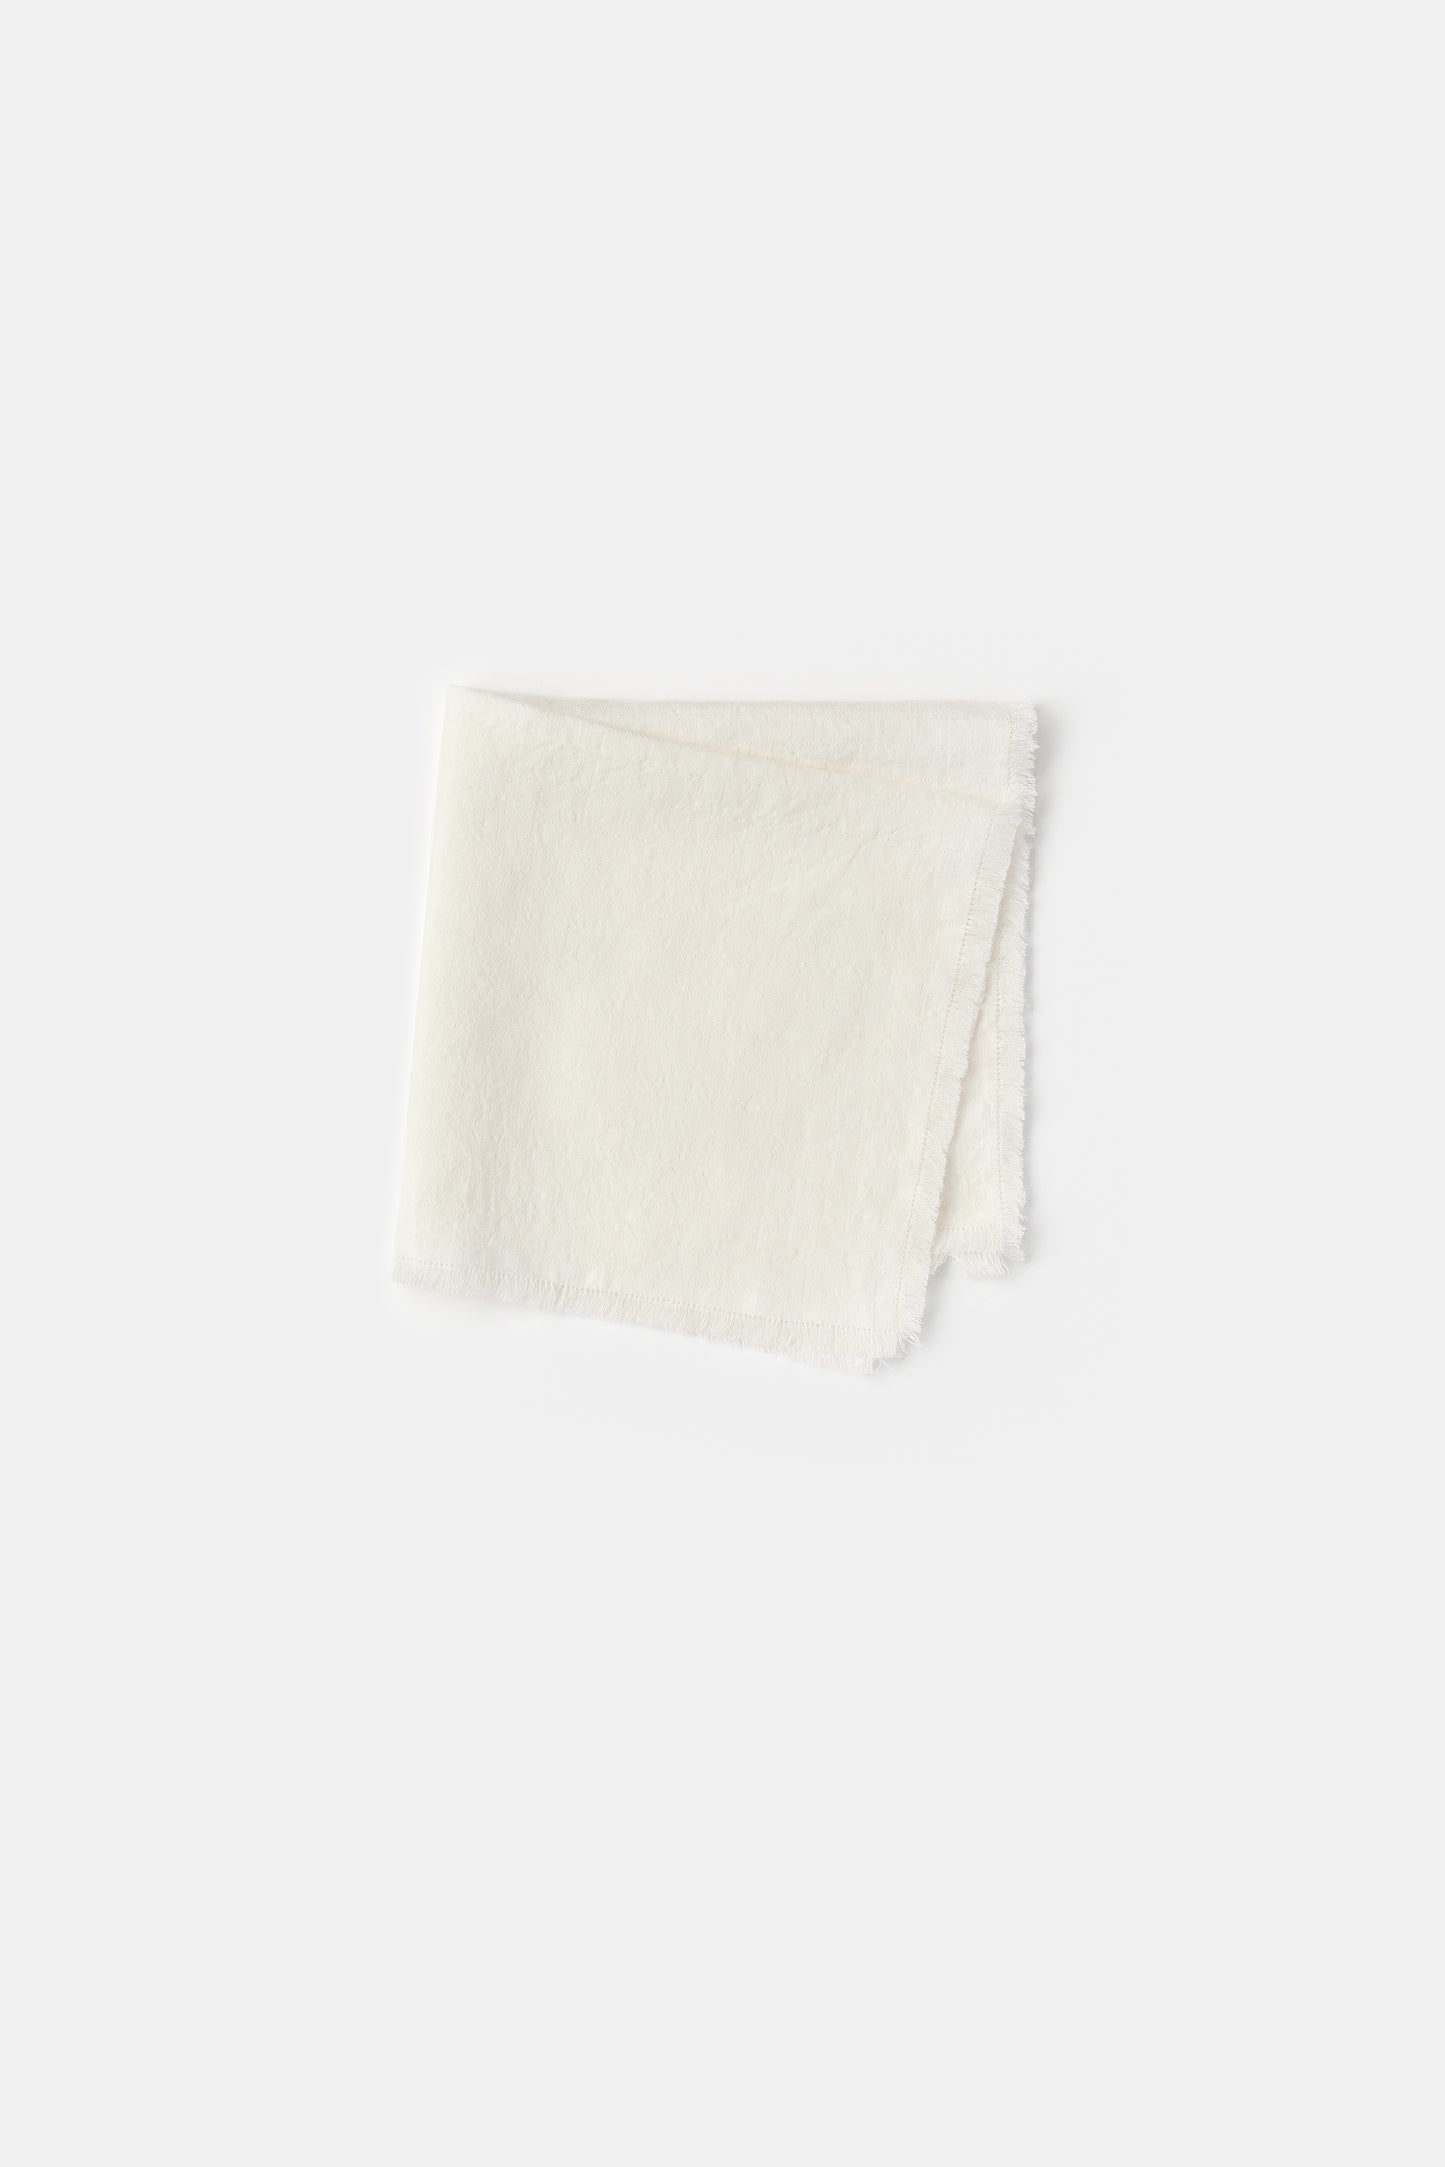 "Galia" napkin in White 1/4